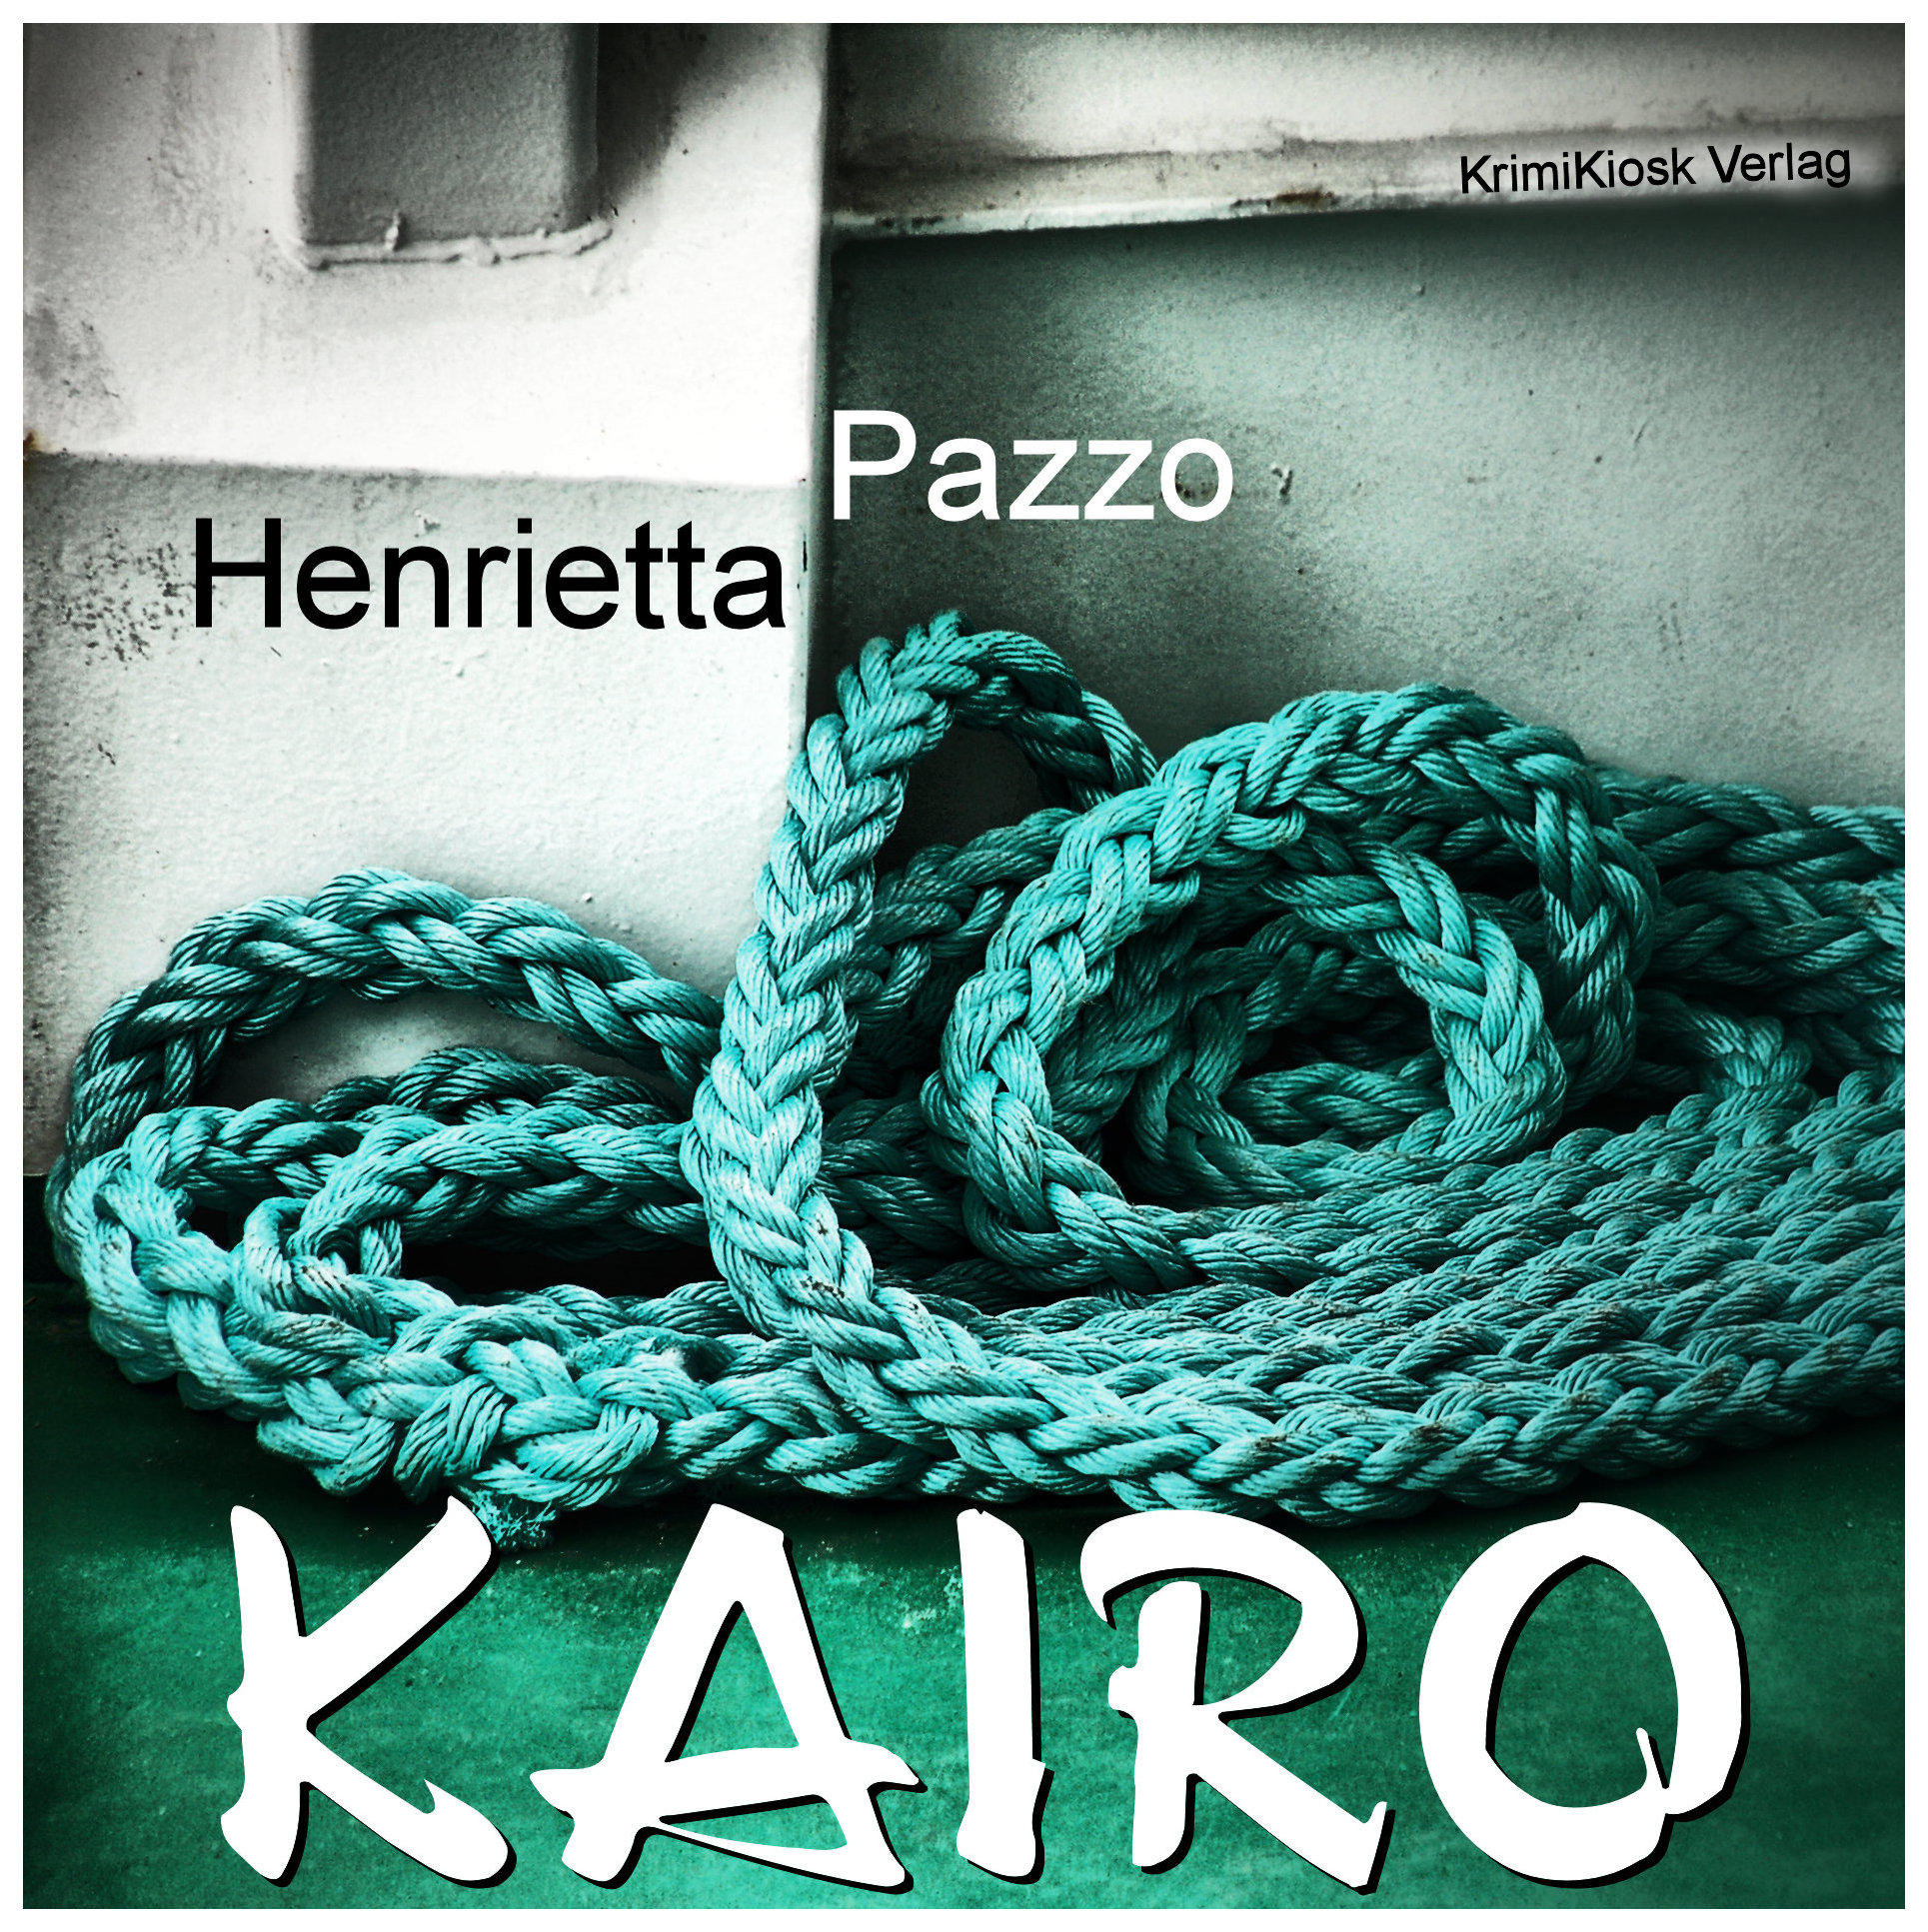 KAIRO  Episode 12 Kriminalroman von Henrietta Pazzo